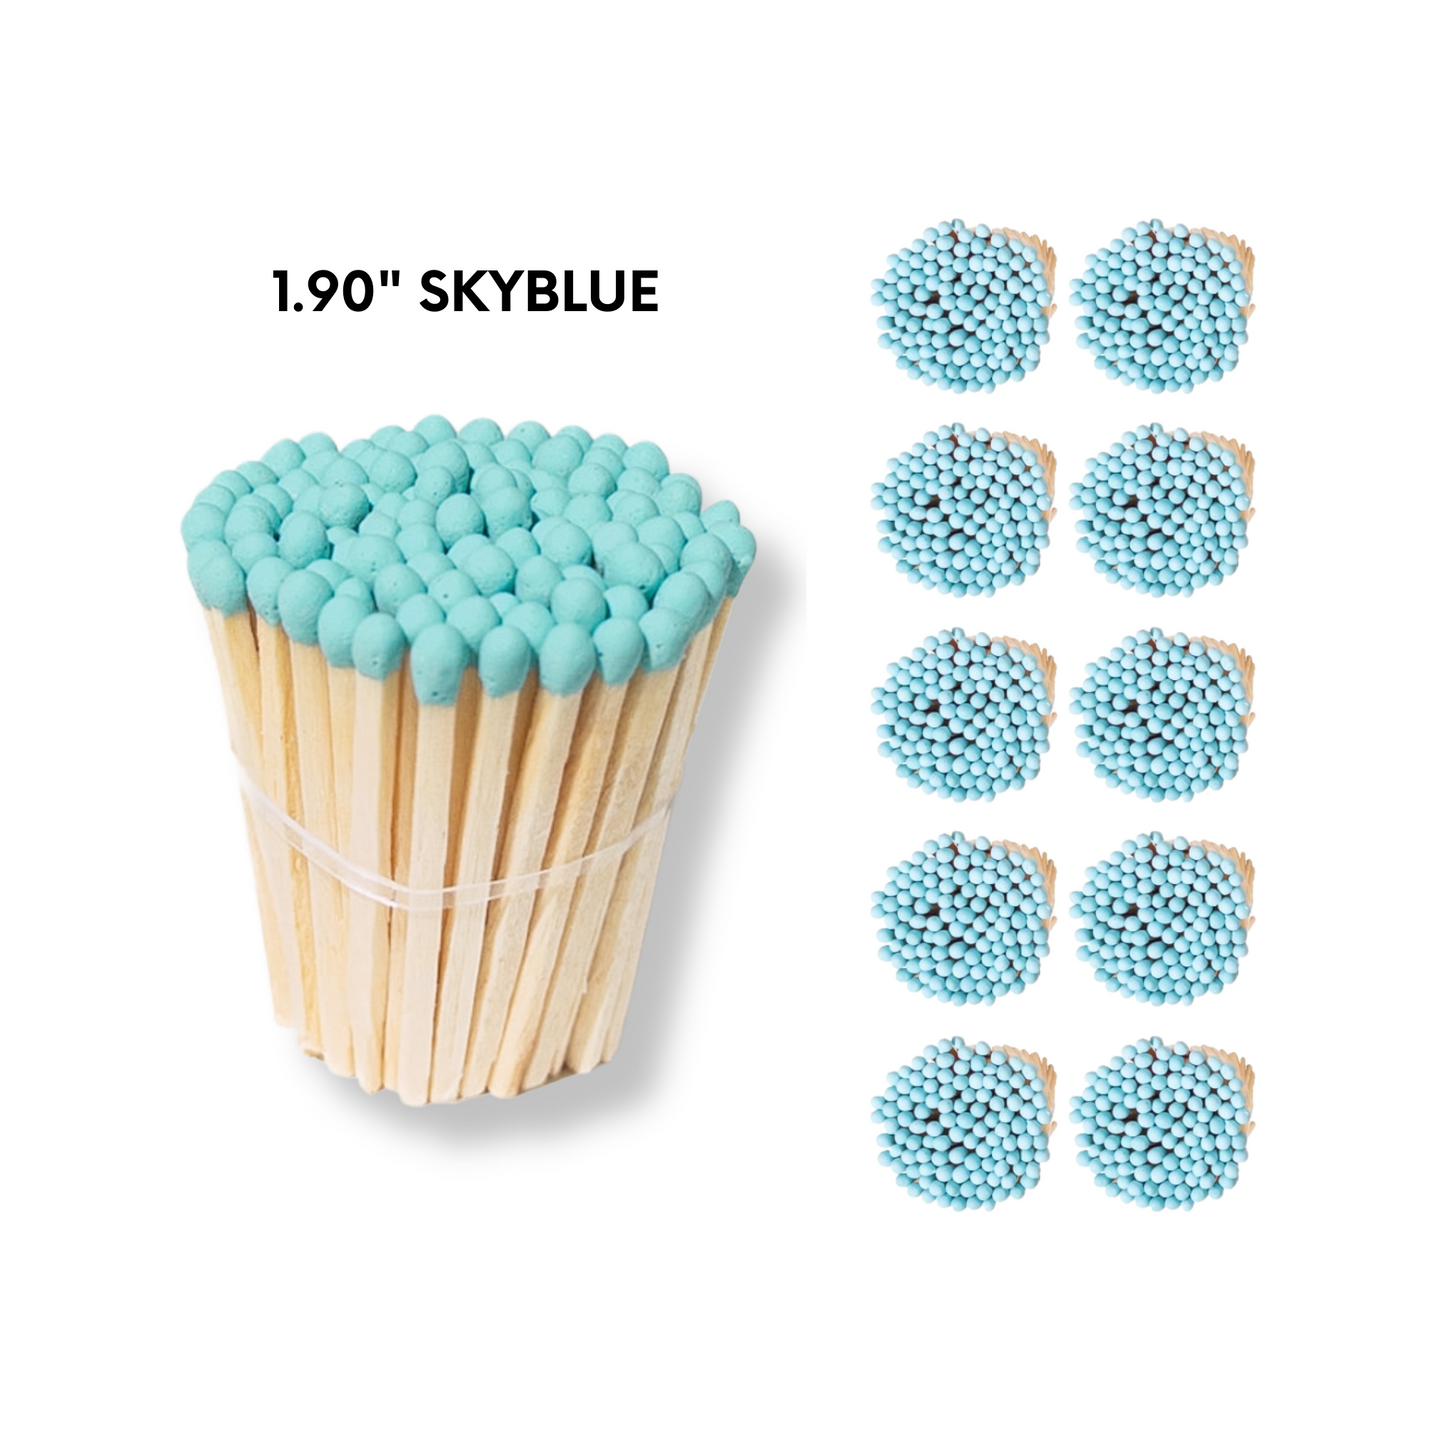 Sky-blue 1.90" - Safety Matches